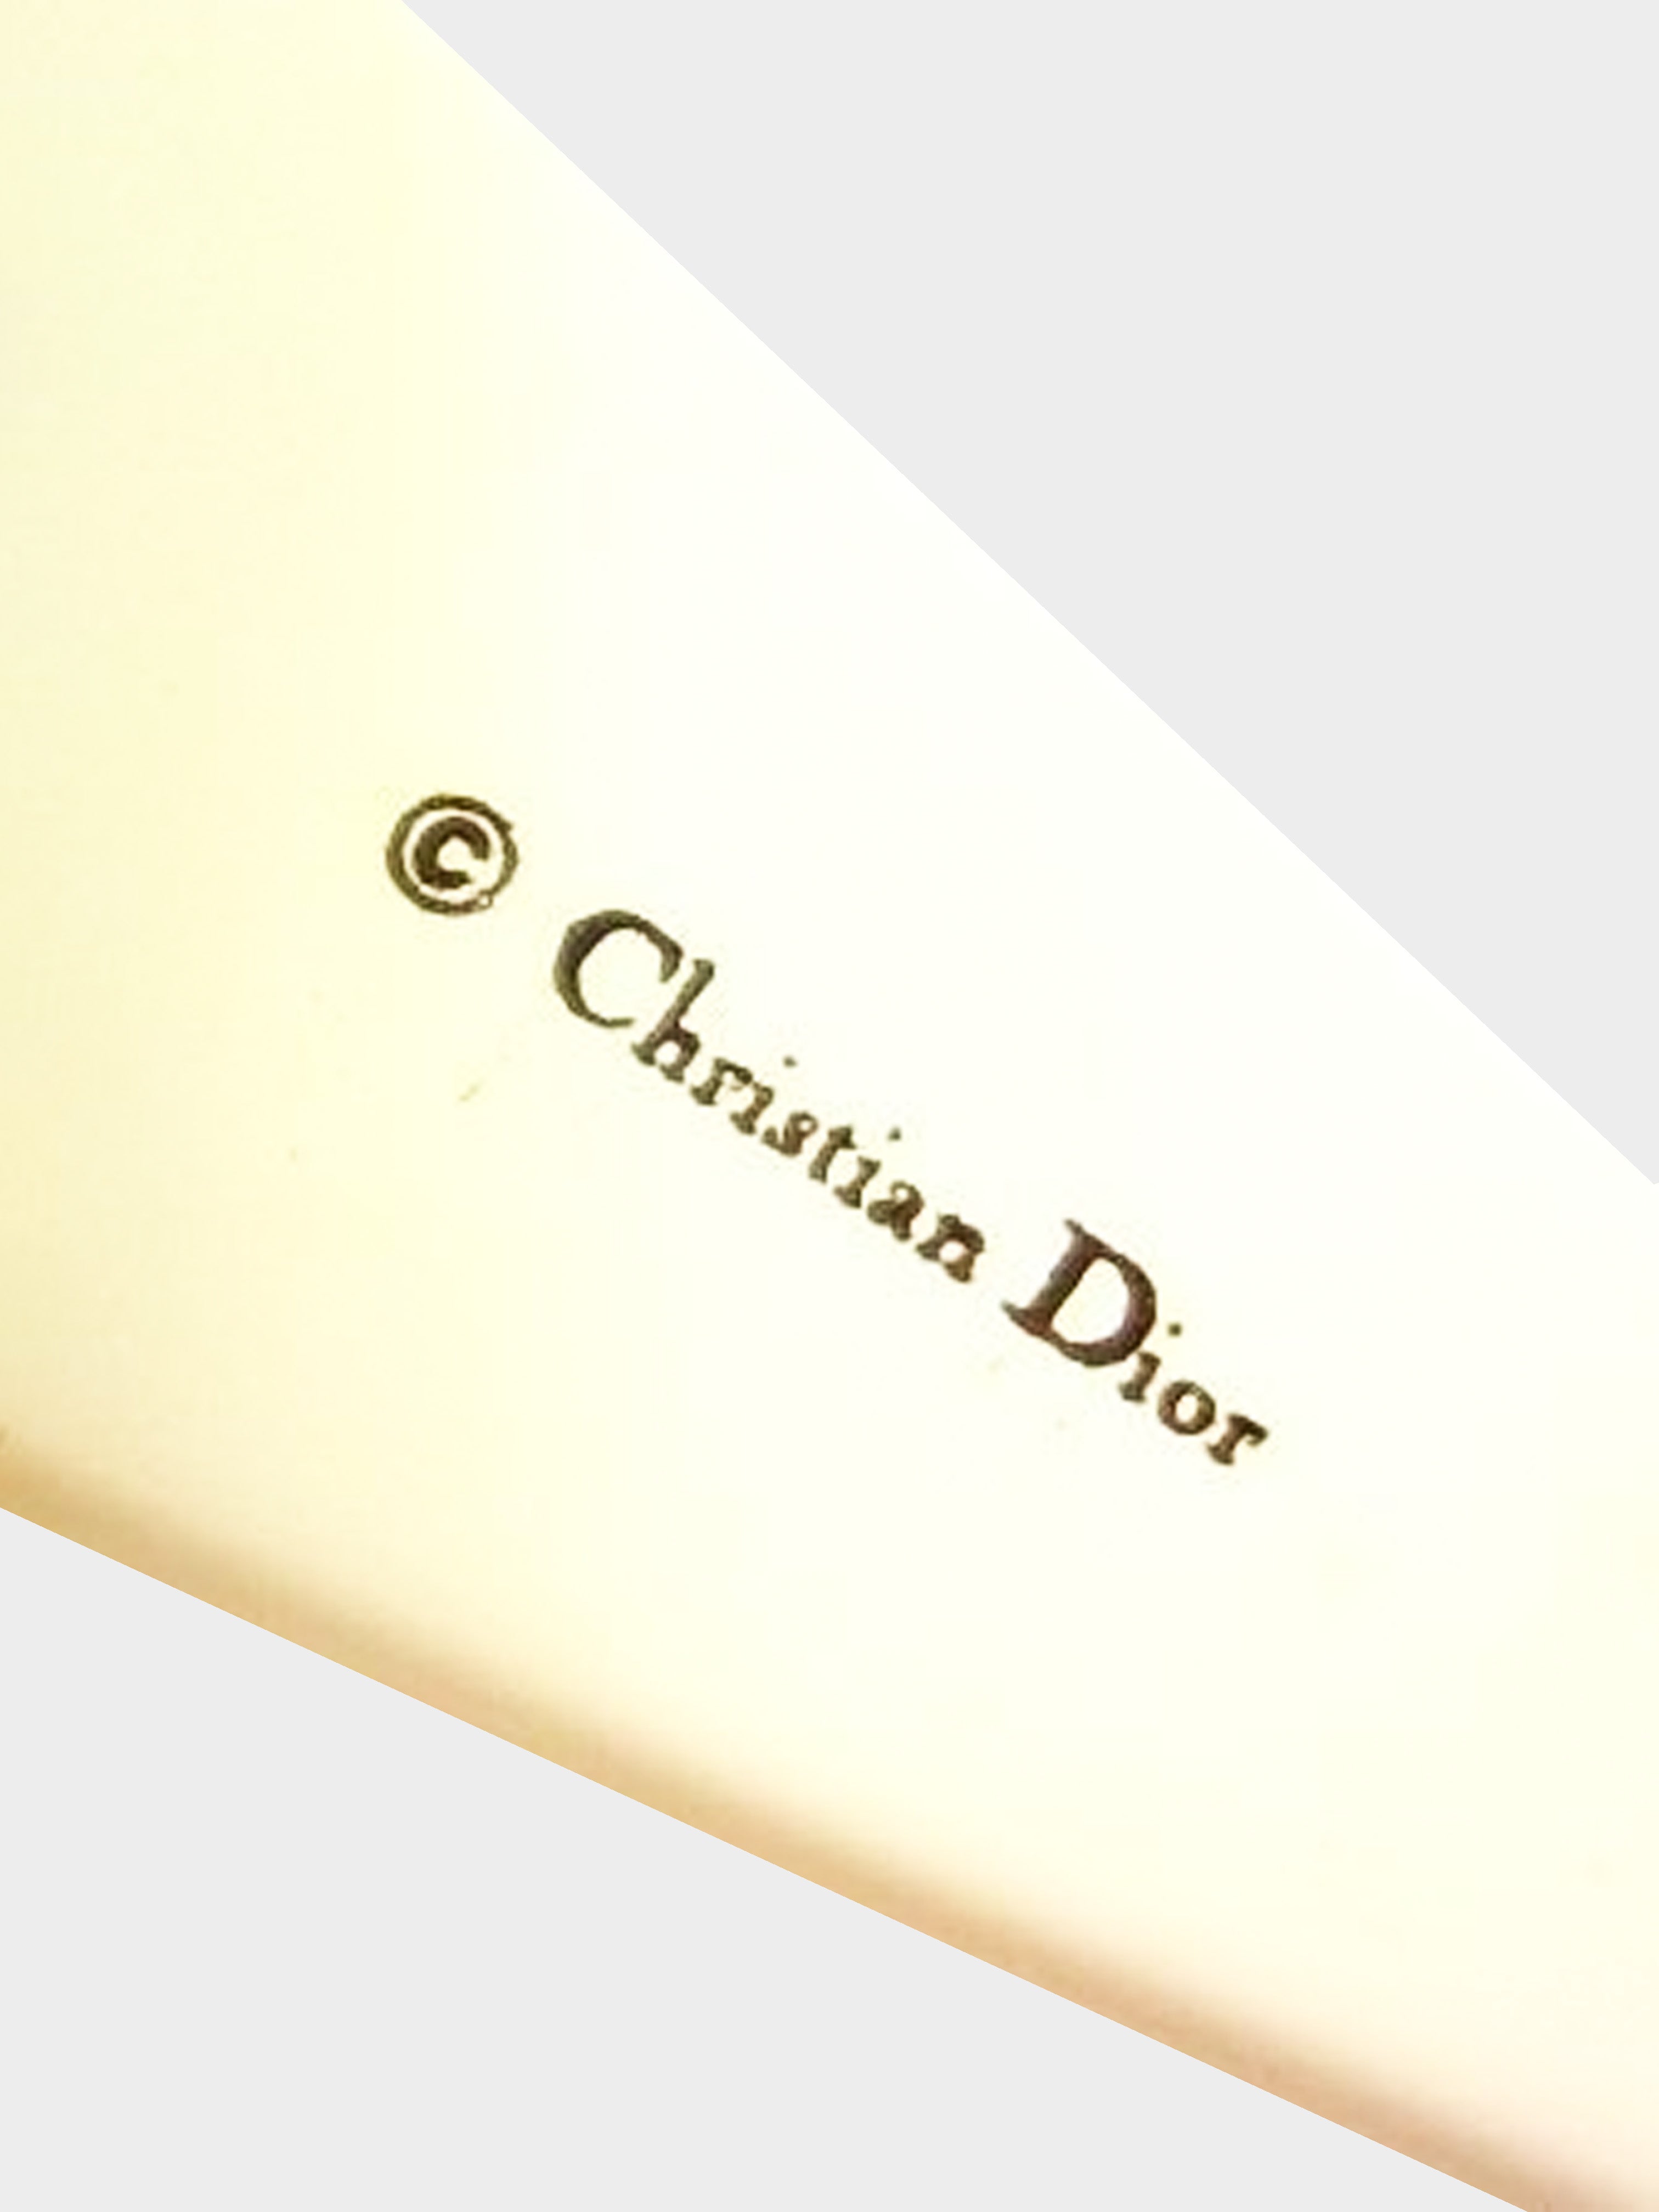 Christian Dior 1990s SS Ivory Sunglasses